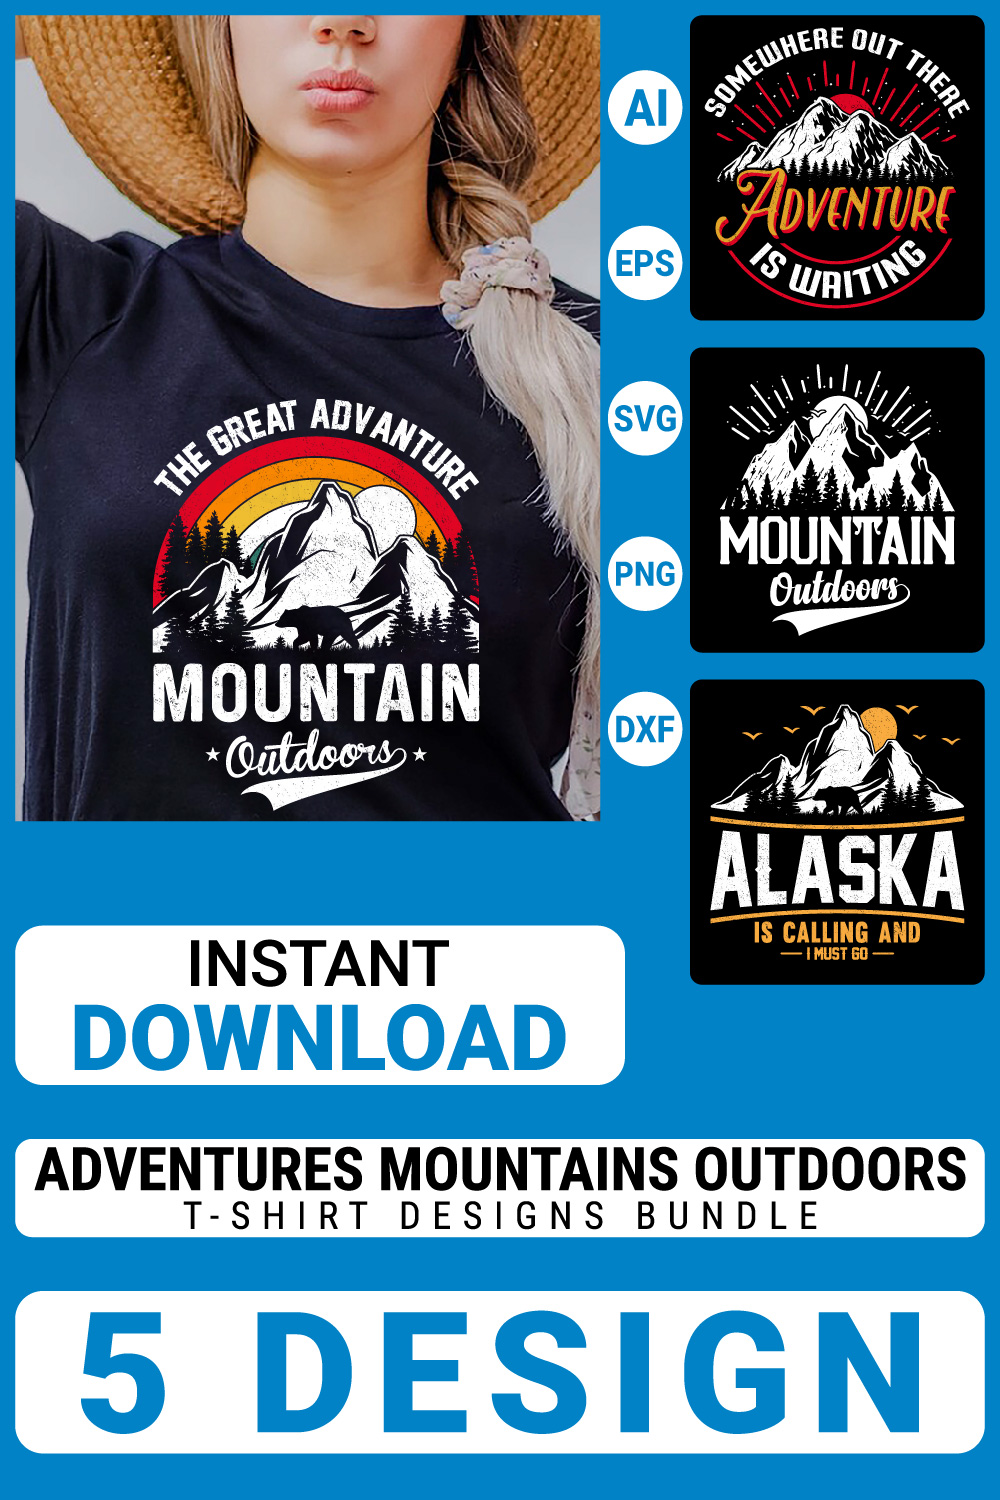 Adventures mountains Outdoors Vector illustration t-shirt design Graphic T-Shirt Design pinterest preview image.